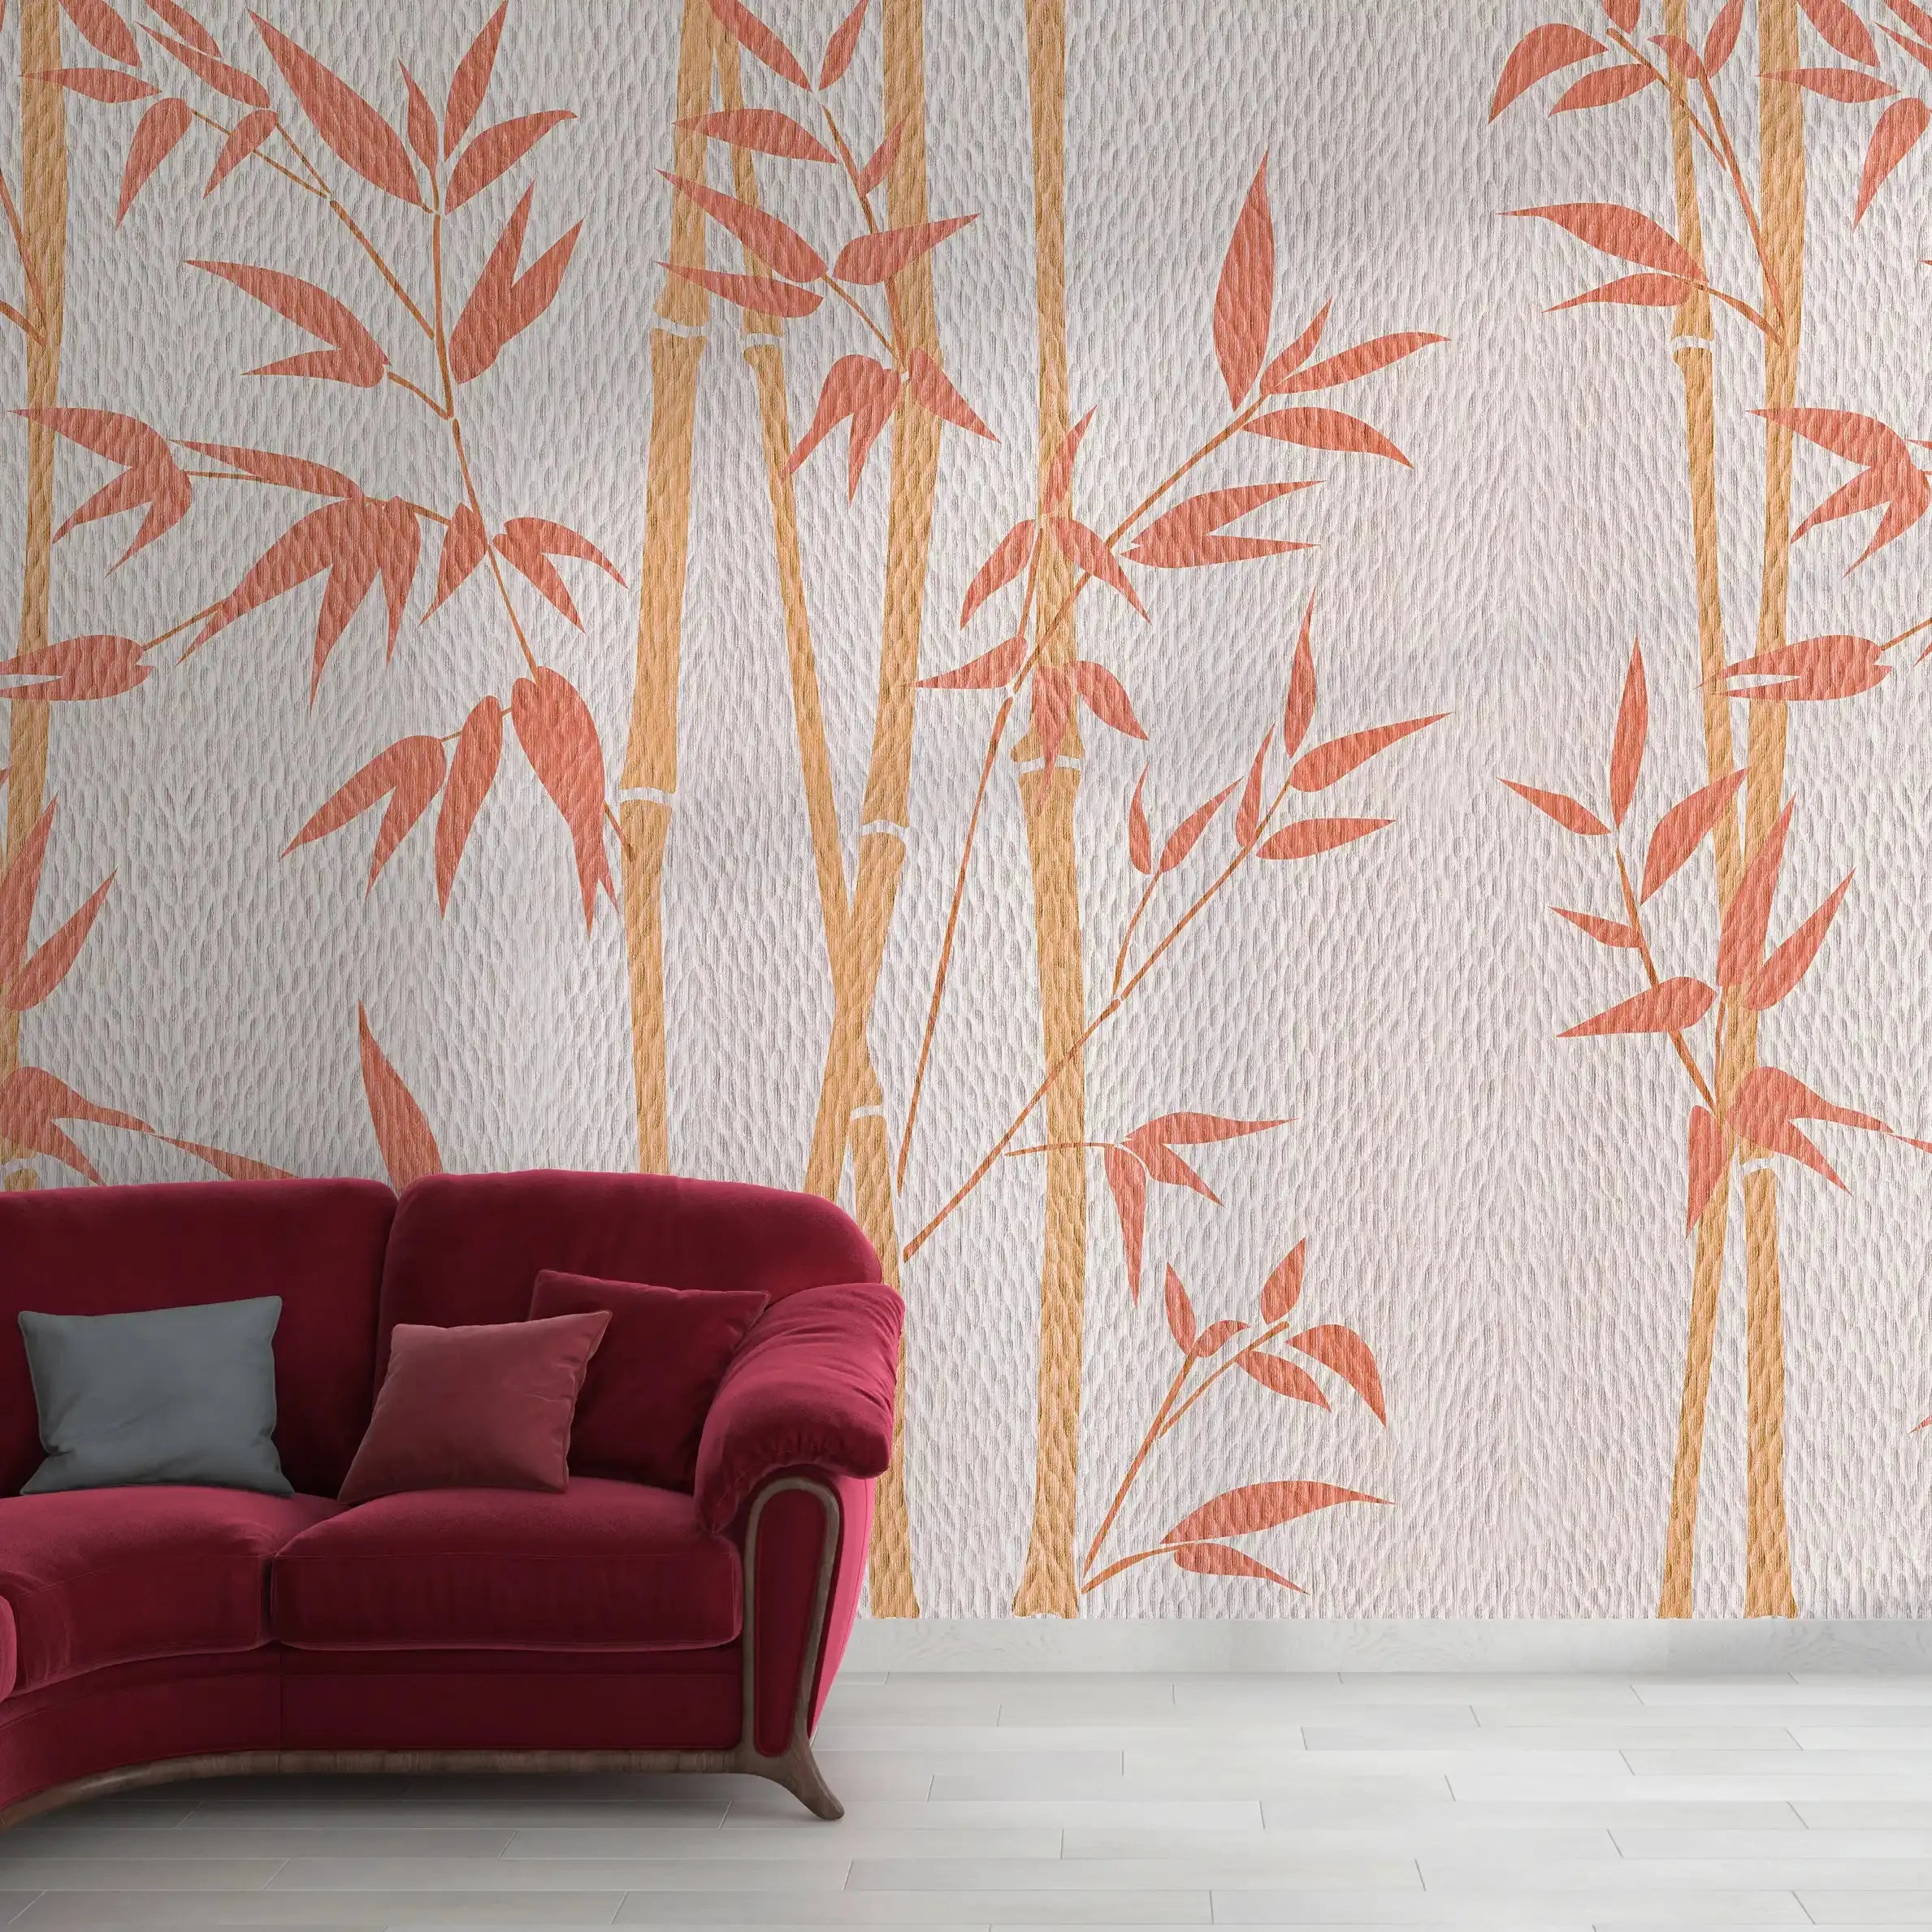 3020-C / Tropical Bamboo Leaf Wallpaper, Peel and Stick, Easy Install, Adhesive Boho Decor for Kitchen, Bathroom - Artevella